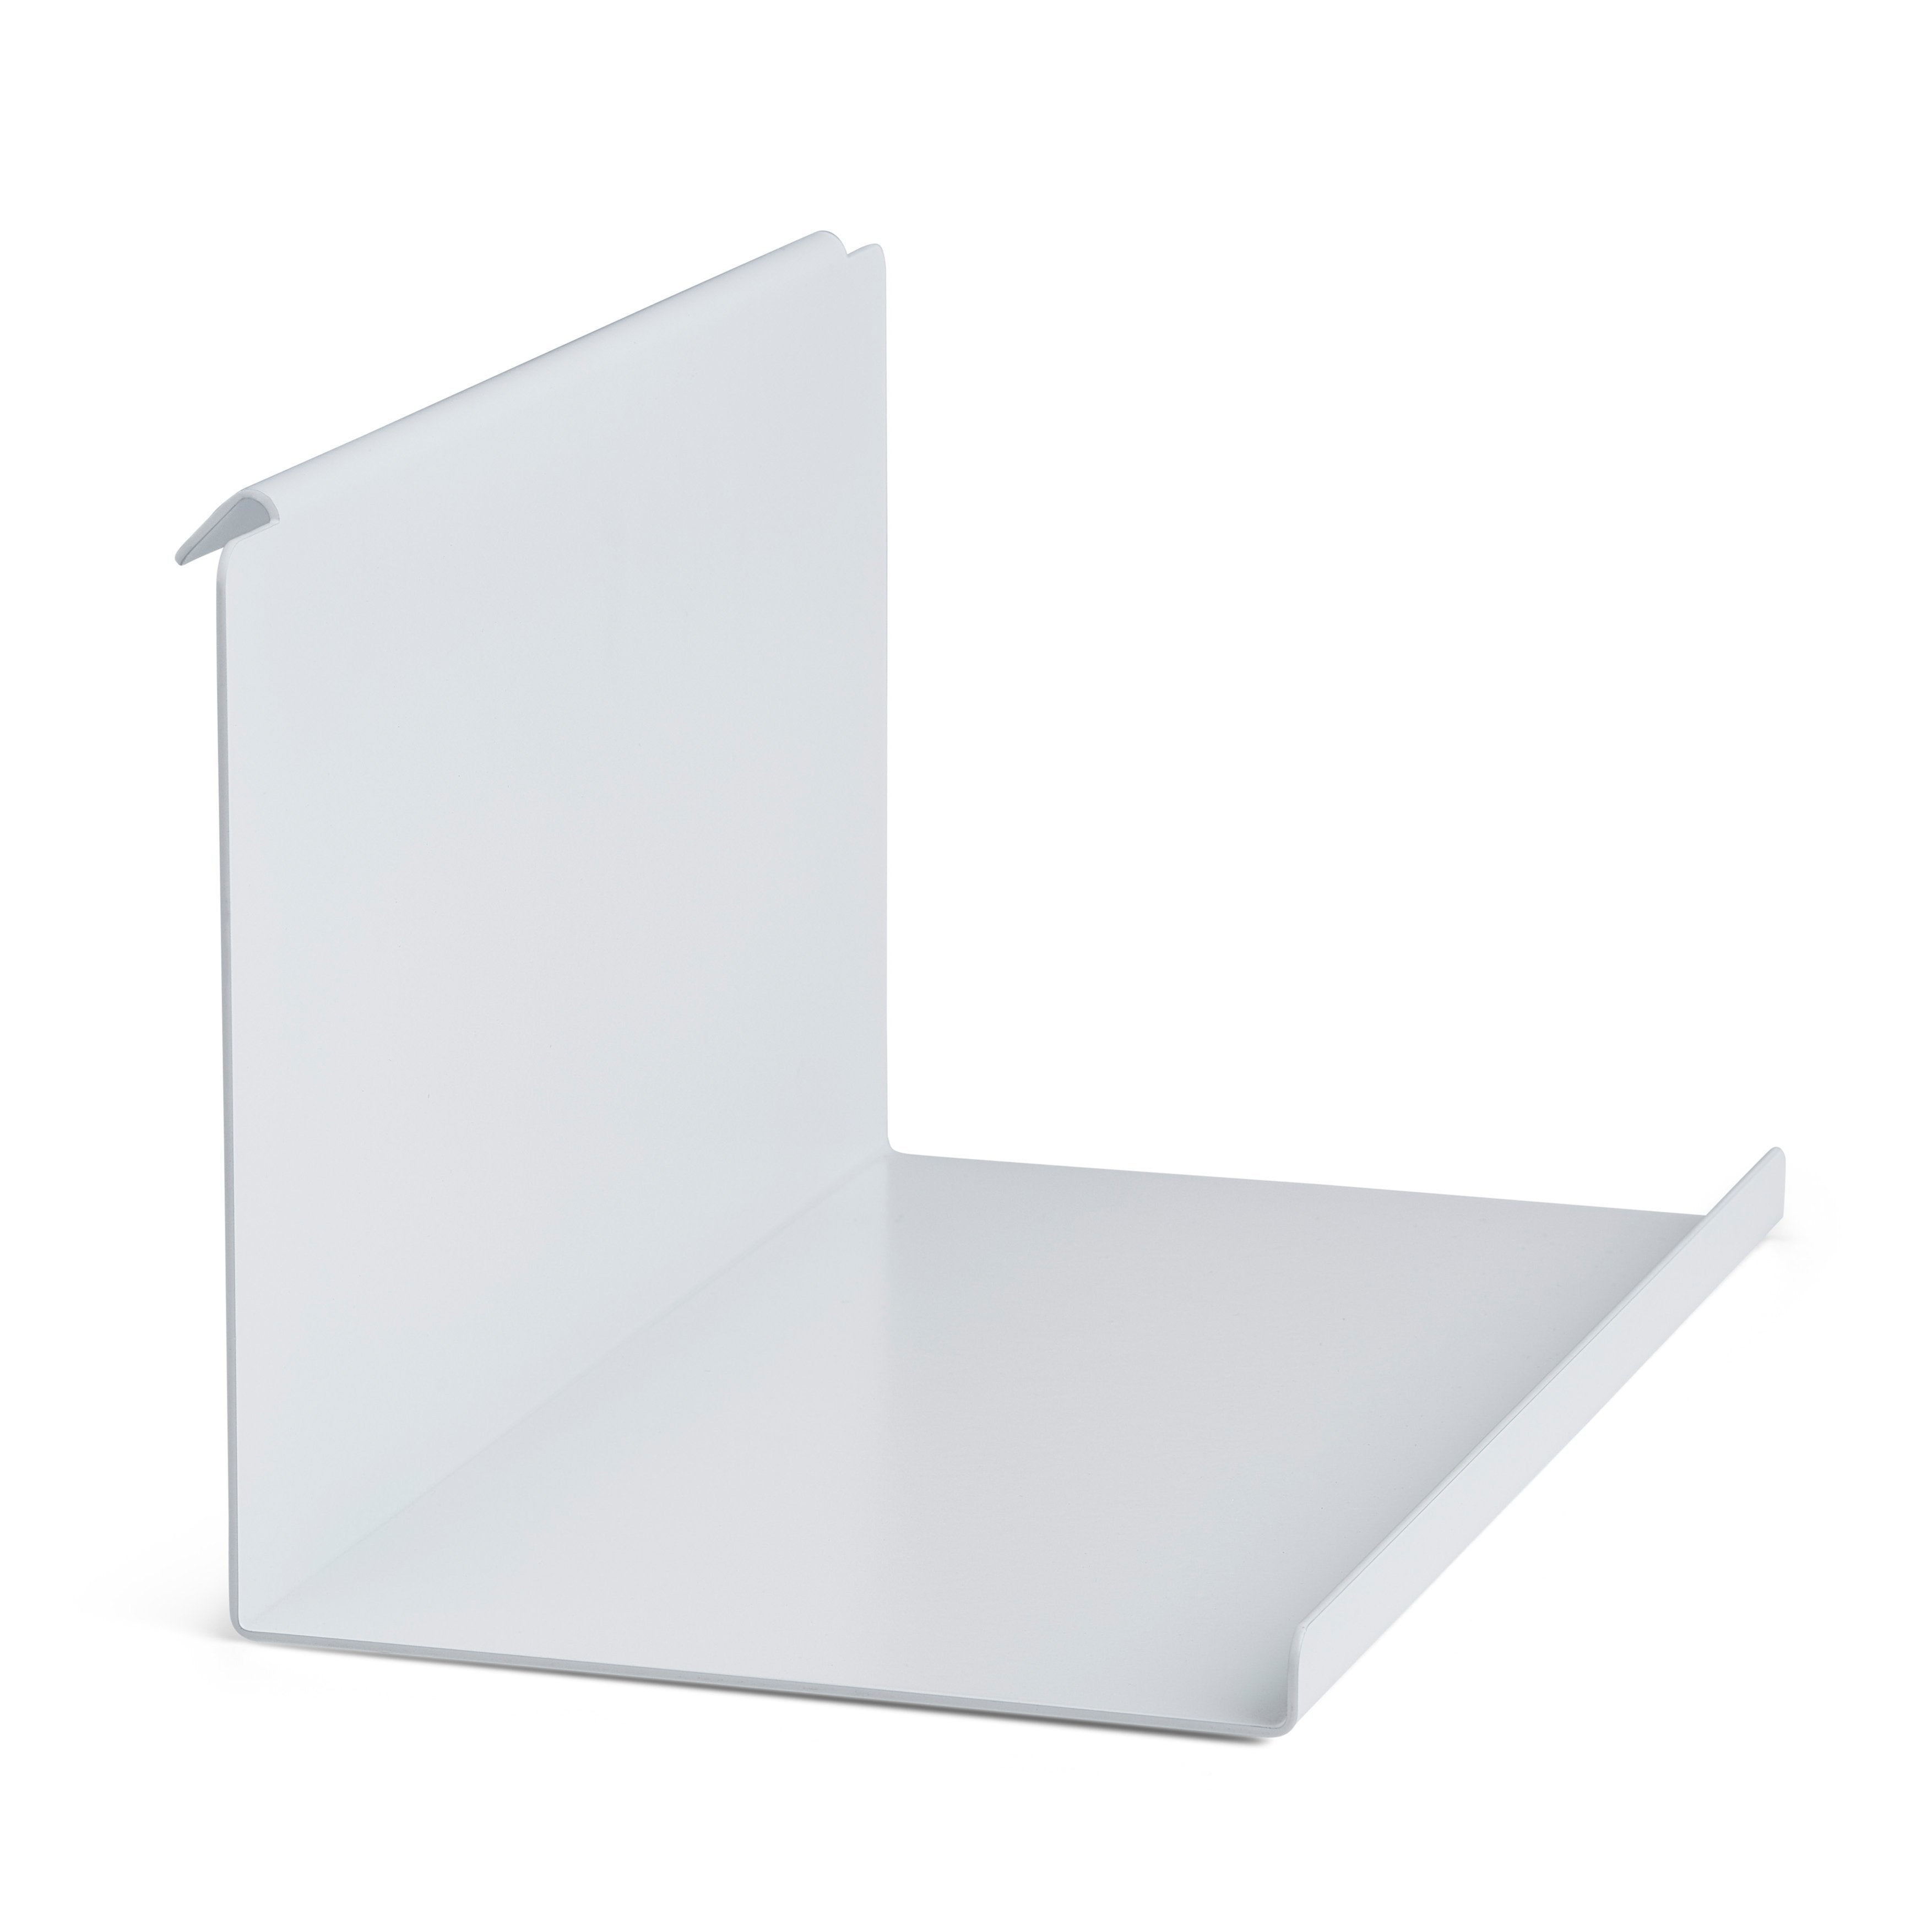 Gejst Flex Shelf Side Table White, 13cm